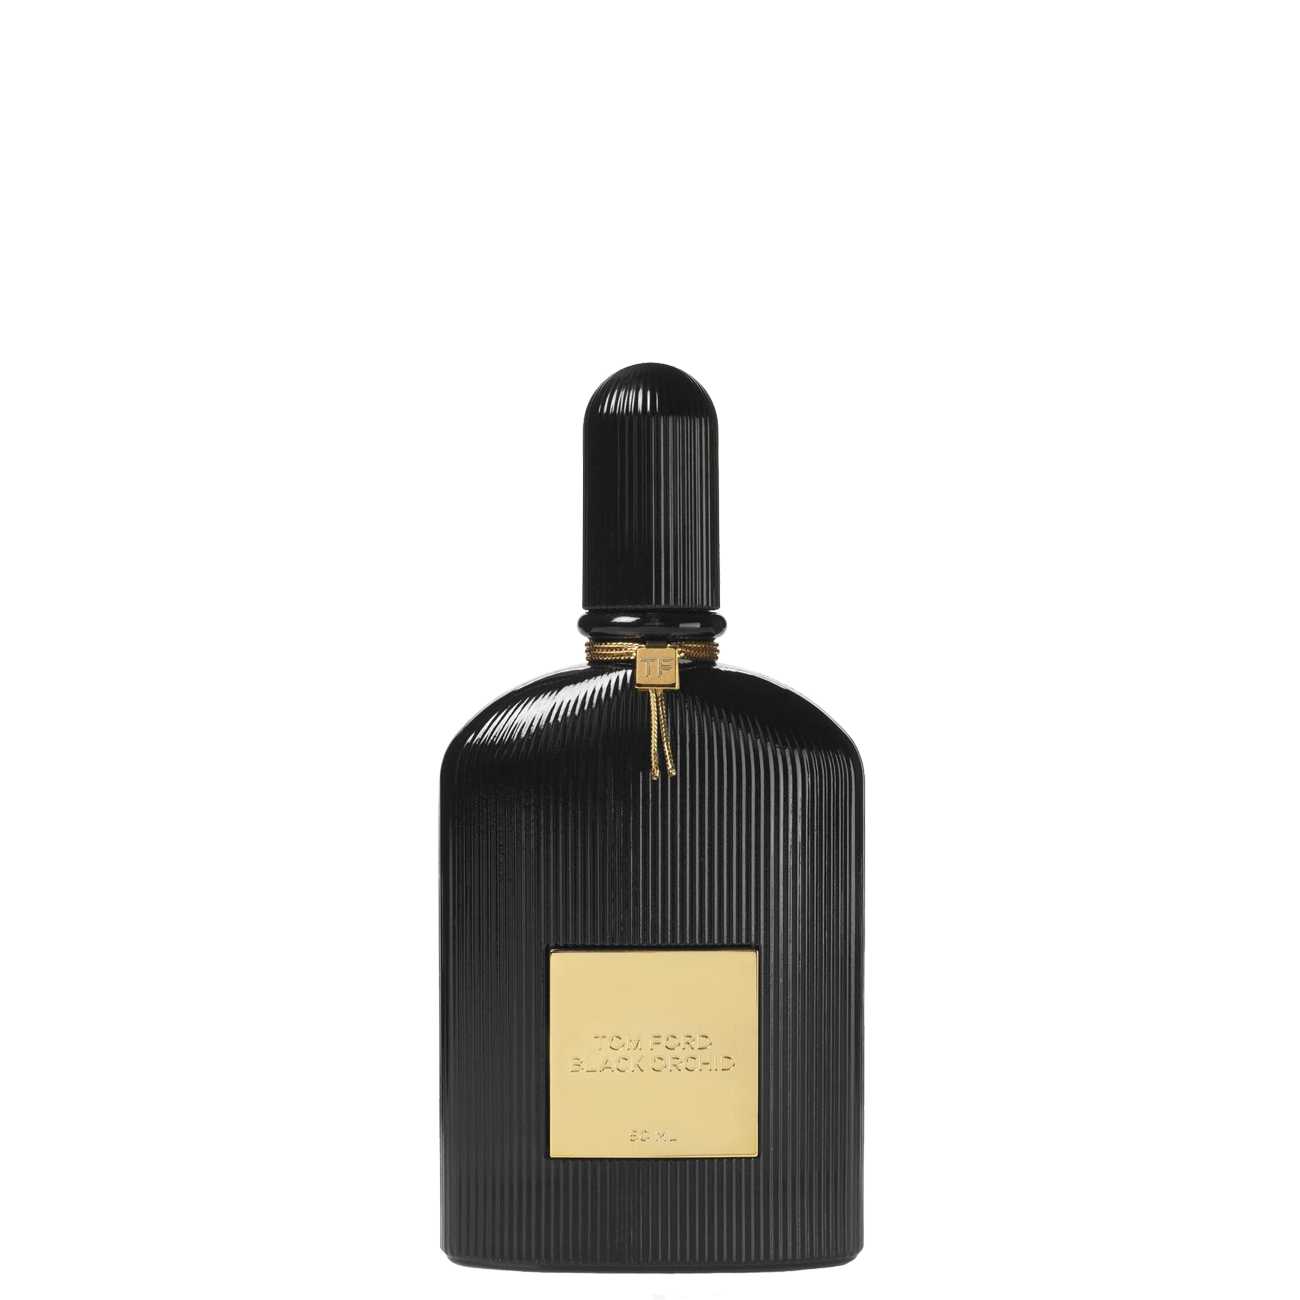 Apa de Parfum Tom Ford BLACK ORCHID 50ml cu comanda online